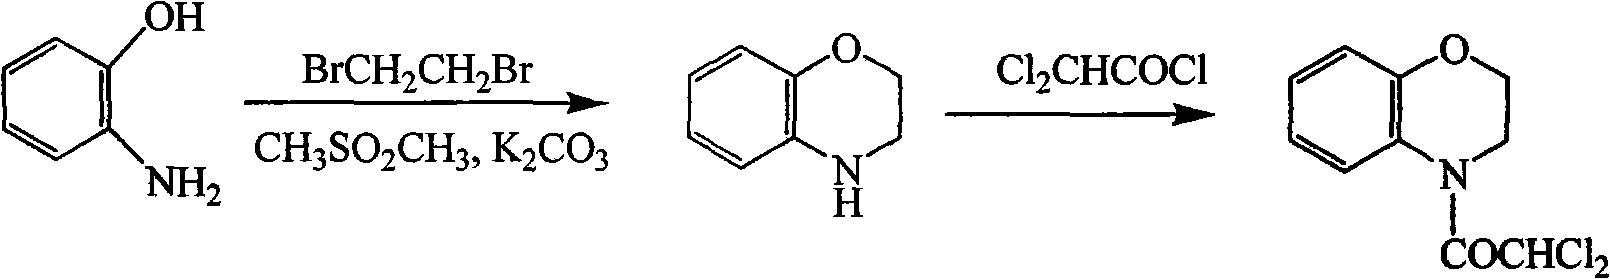 Dichloro-acetyl benzo-oxazine type herbicide safener and synthetic method thereof